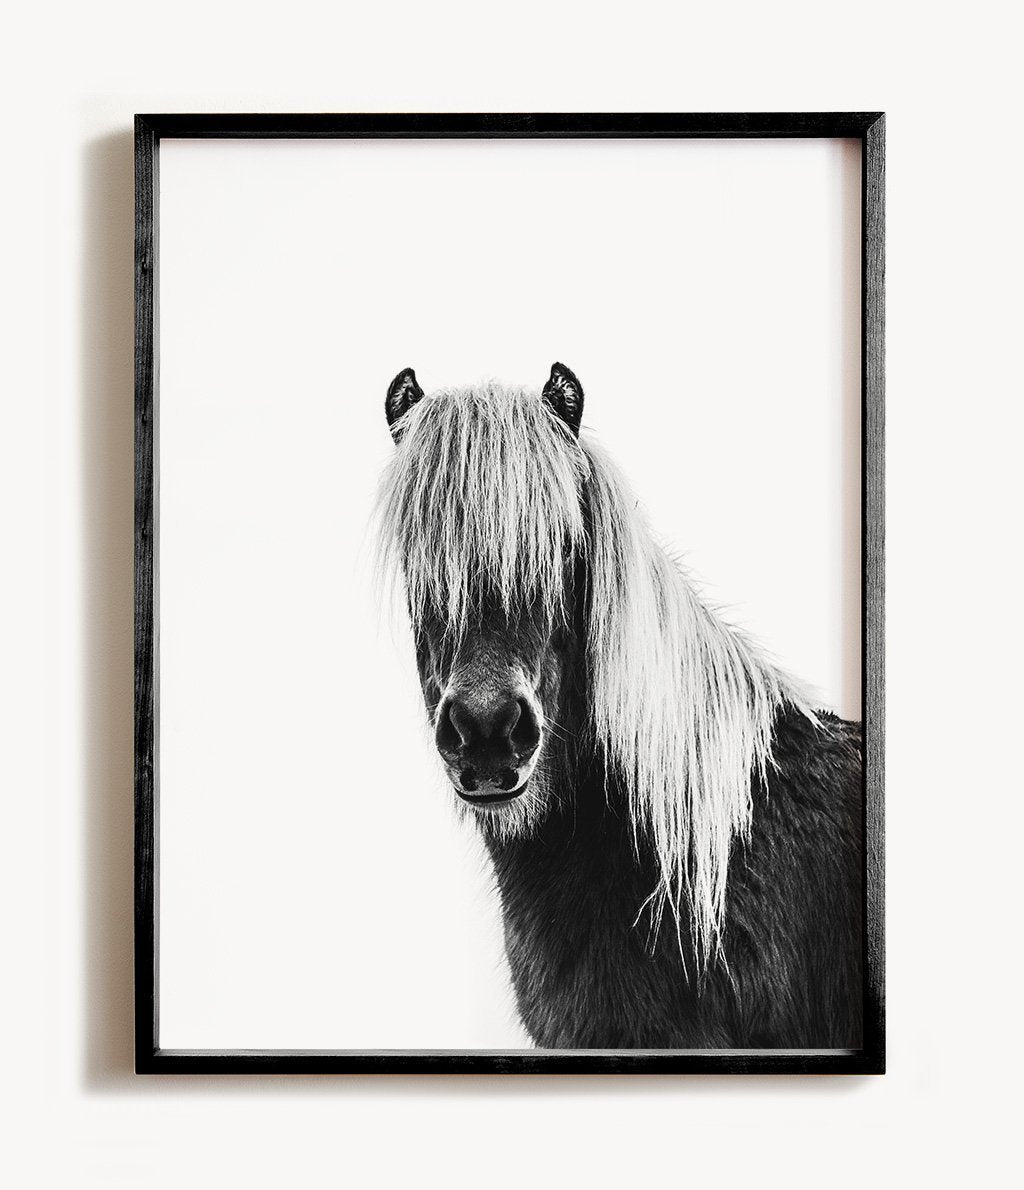 Black & White Shaggy Horse Print - The Crown Prints